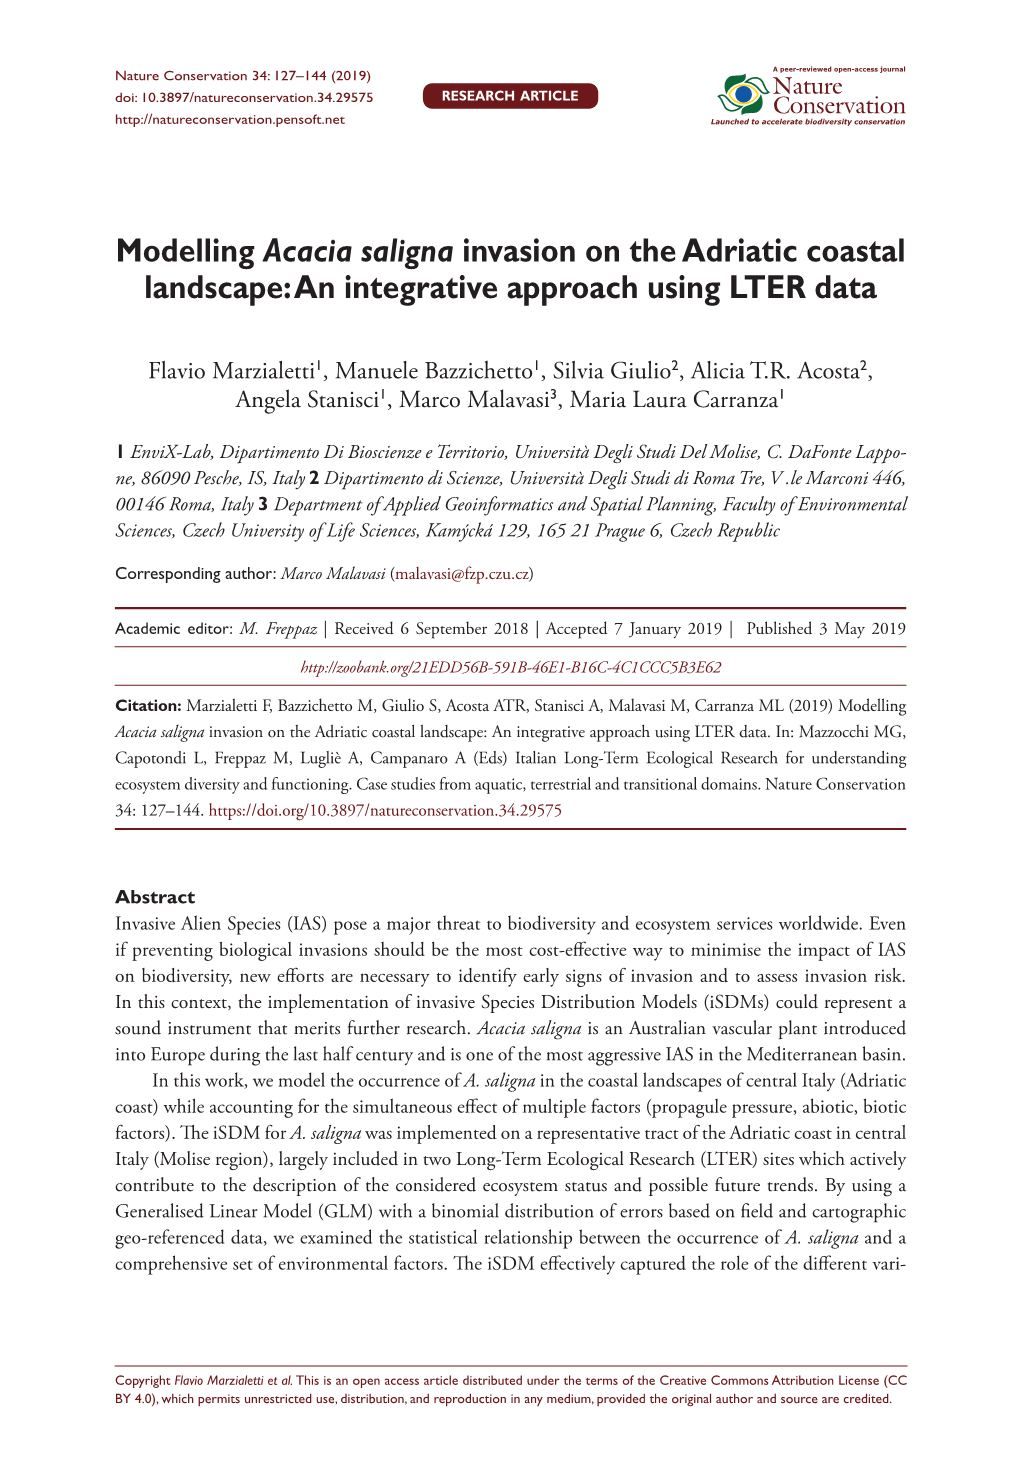 Modelling Acacia Saligna Invasion on the Adriatic Coastal Landscape: an Integrative Approach Using LTER Data